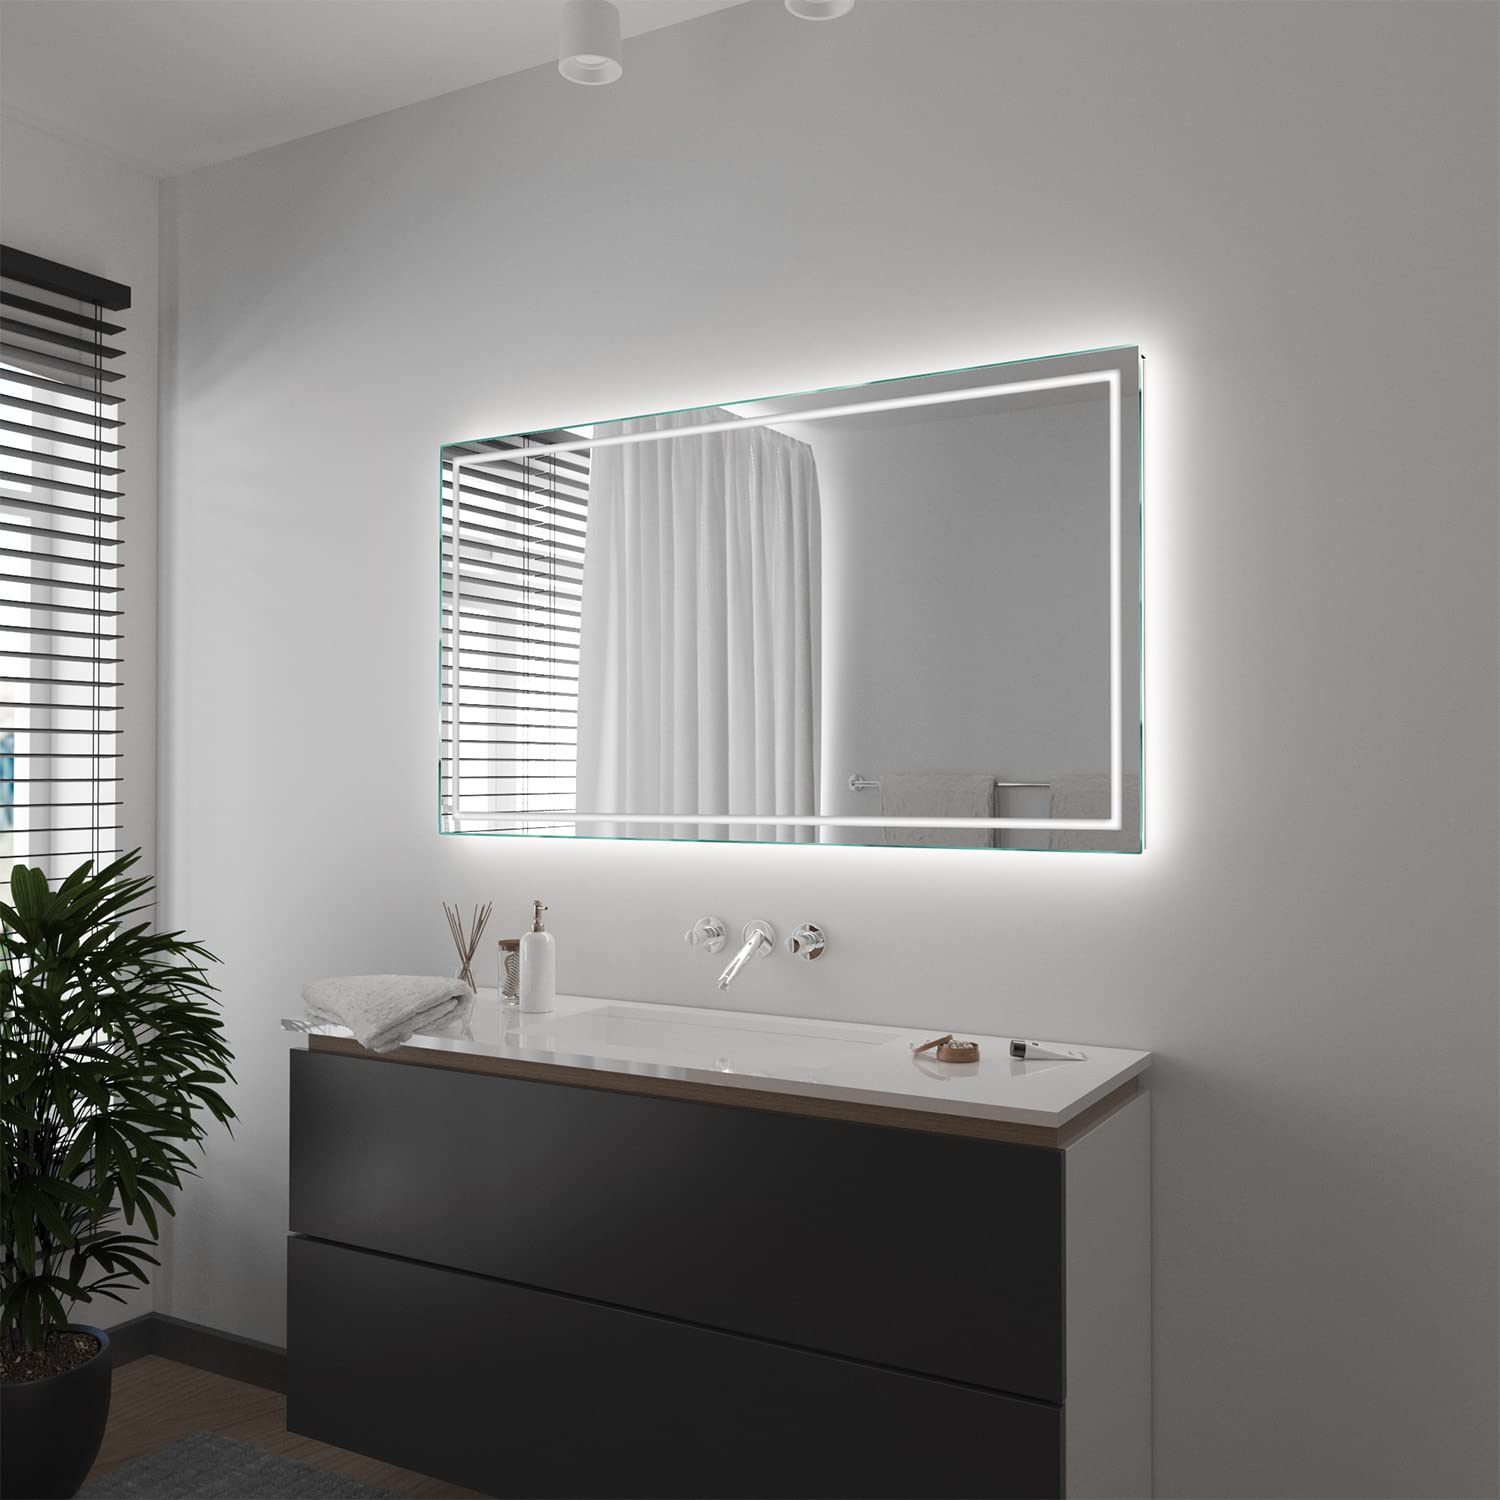 SARAR Wandspiegel mit rundum LED-Beleuchtung 100x90 cm Made in Germany Designo MA4114 Eckiger Badspiegel Spiegel mit Beleuchtung Badezimmerspiegel nach-auf Maß